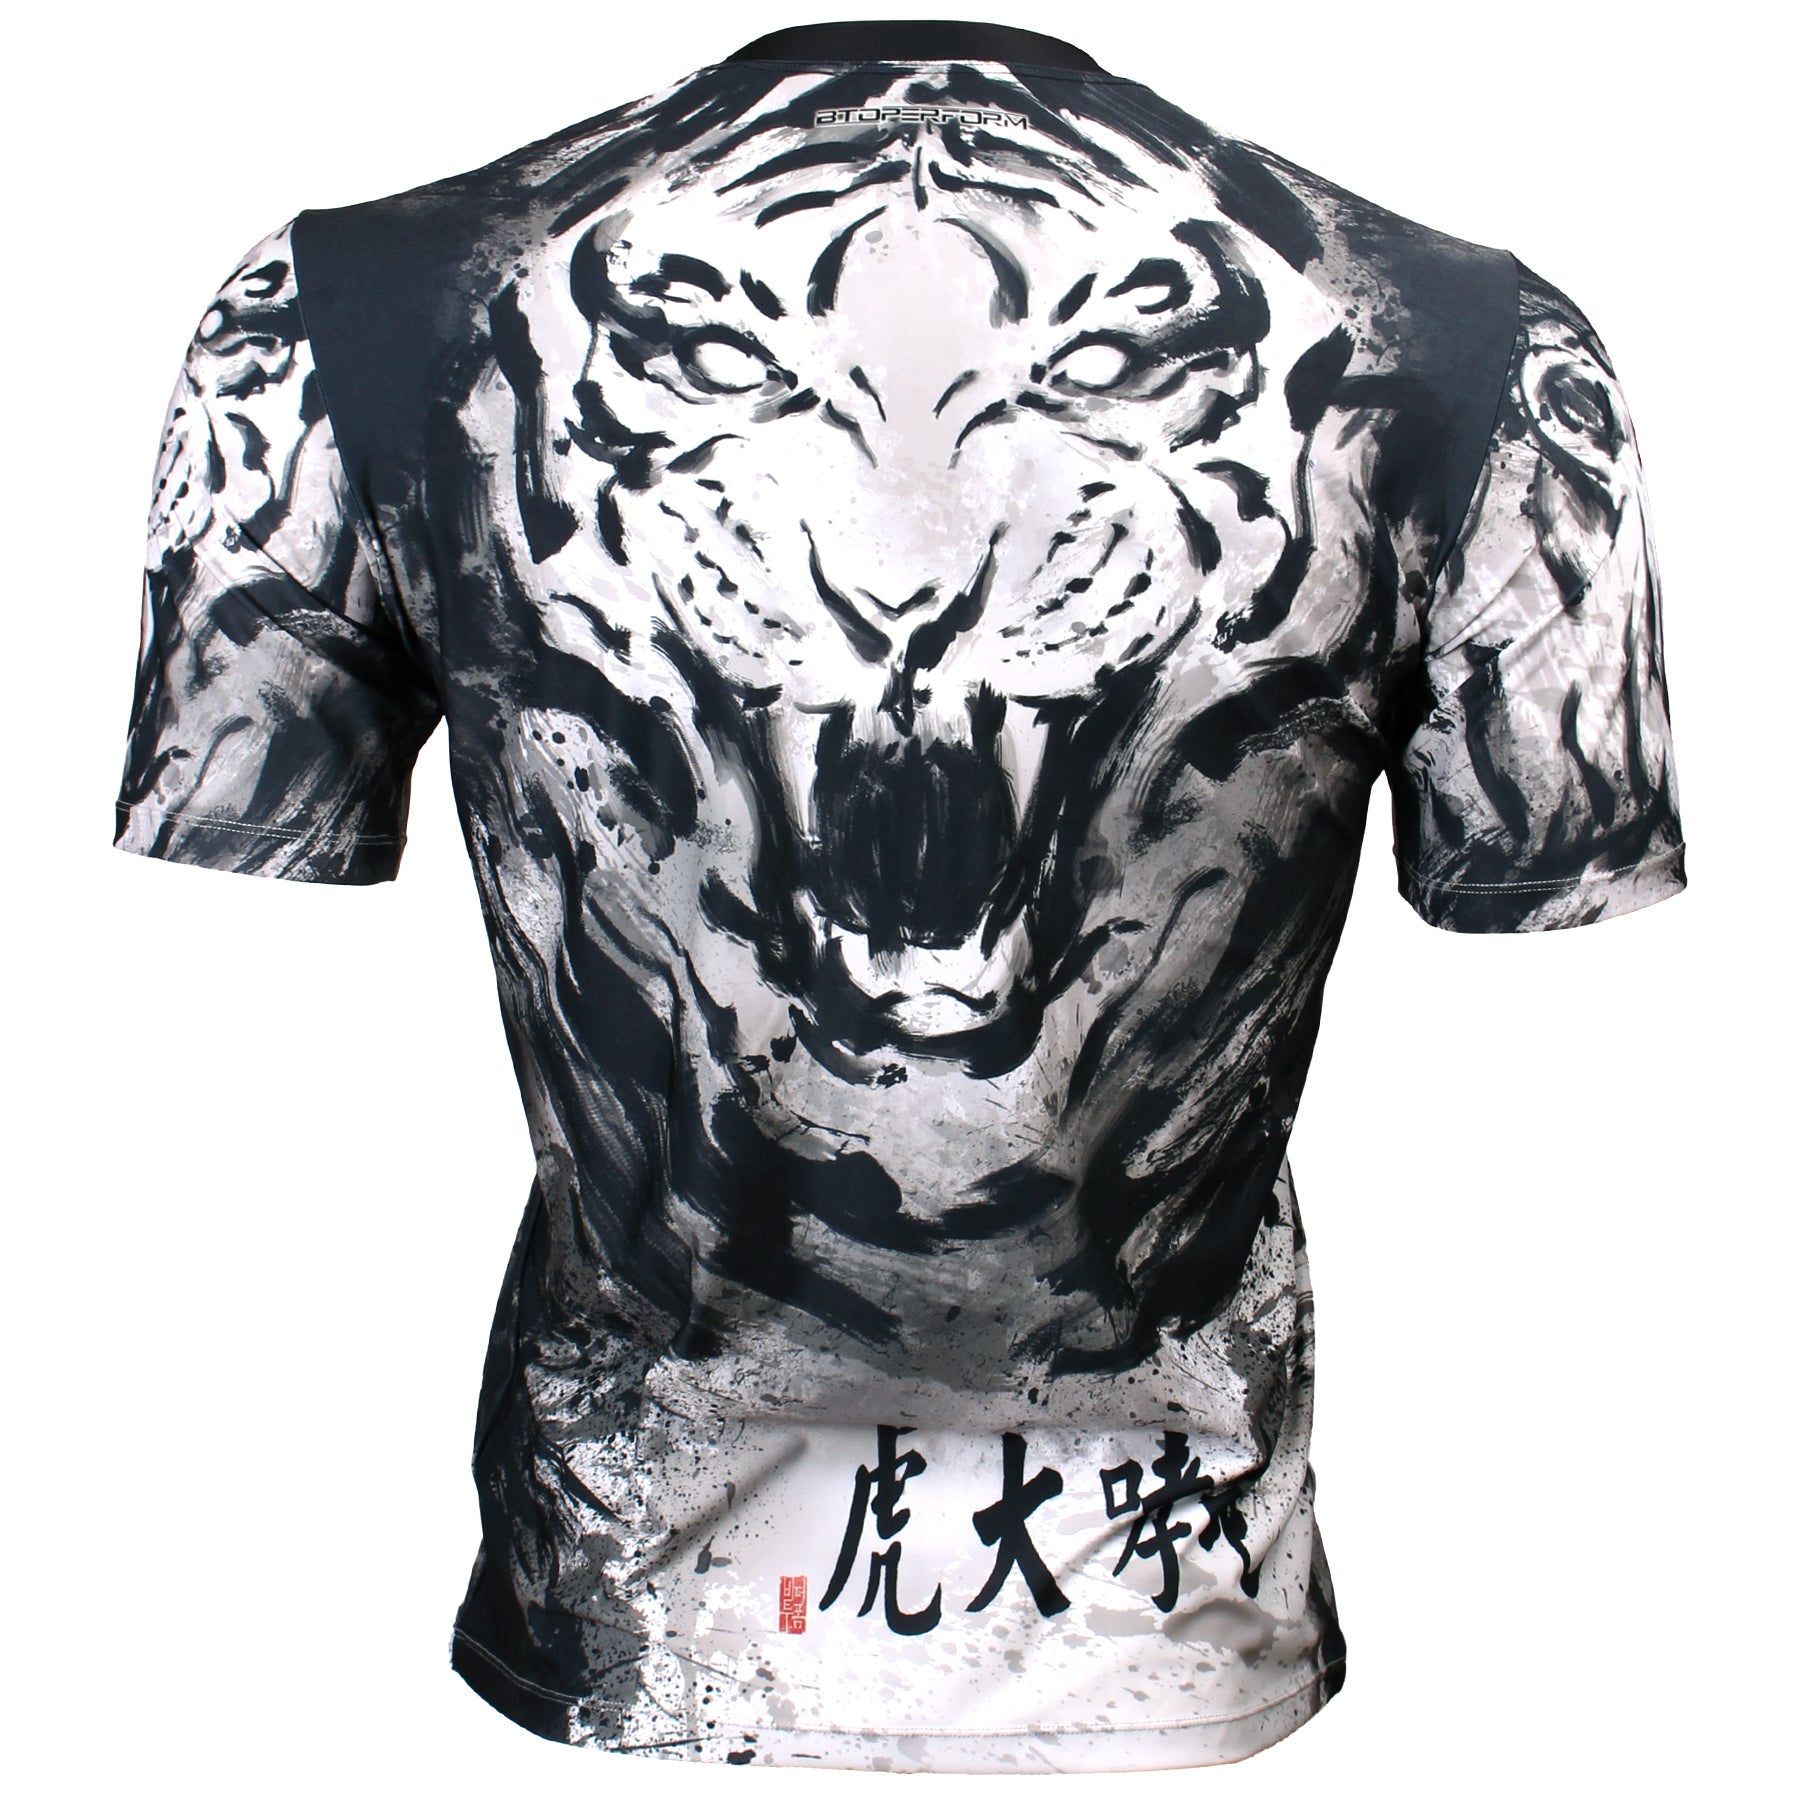 roaring tiger t shirt